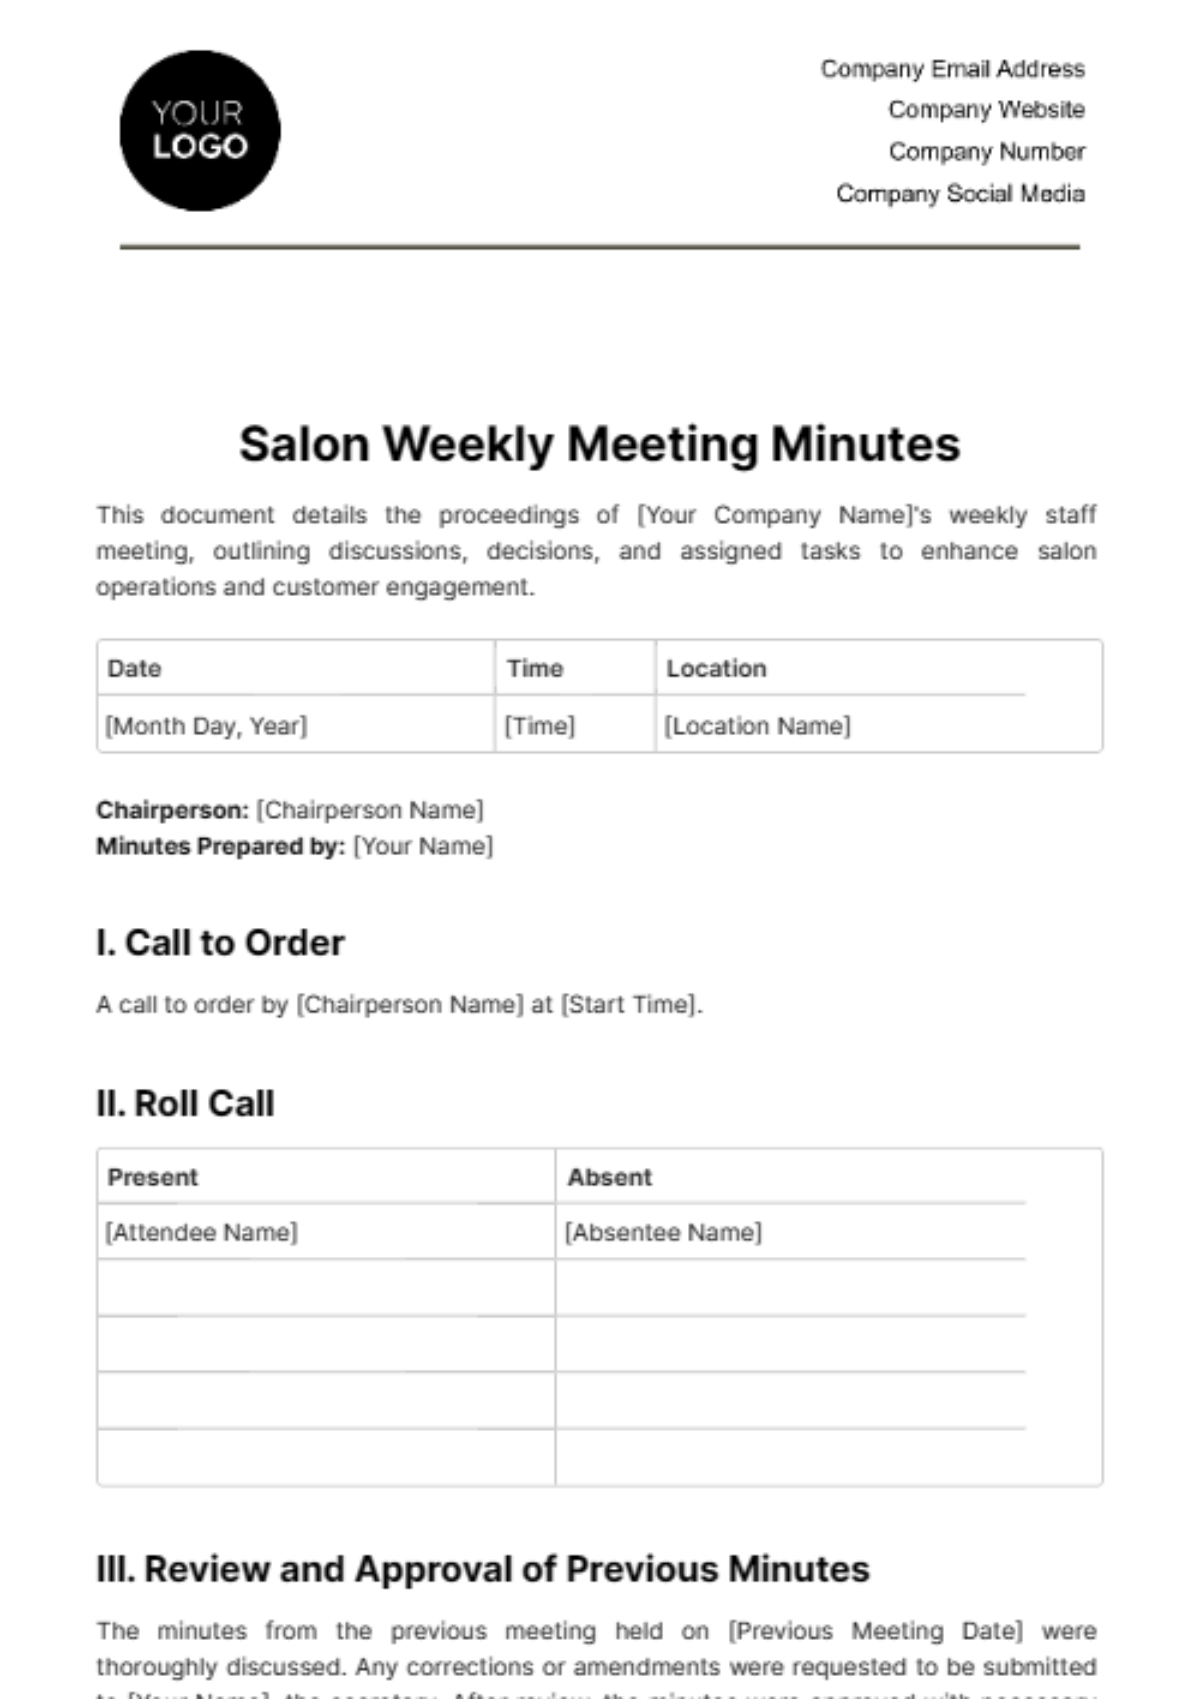 Salon Weekly Meeting Minute Template